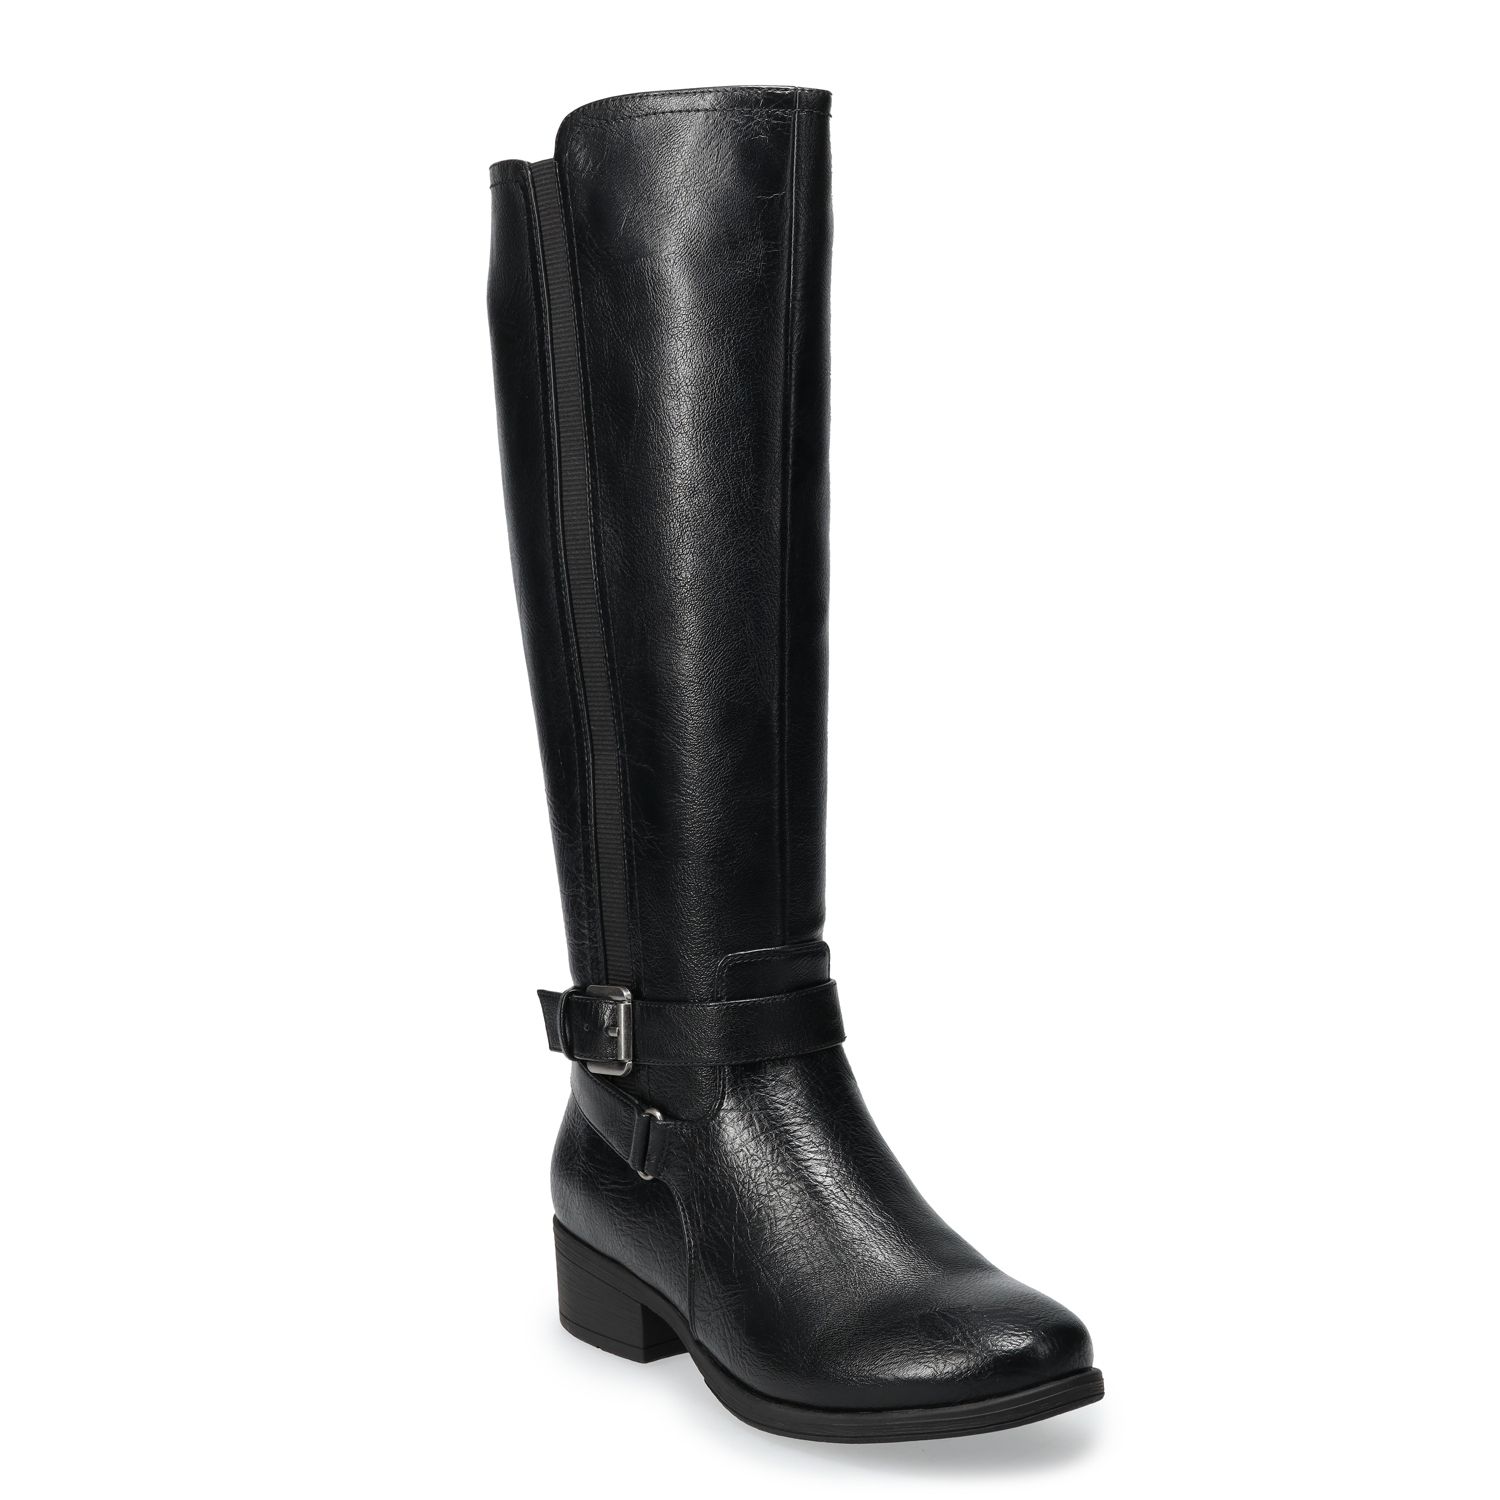 tall black boots size 11